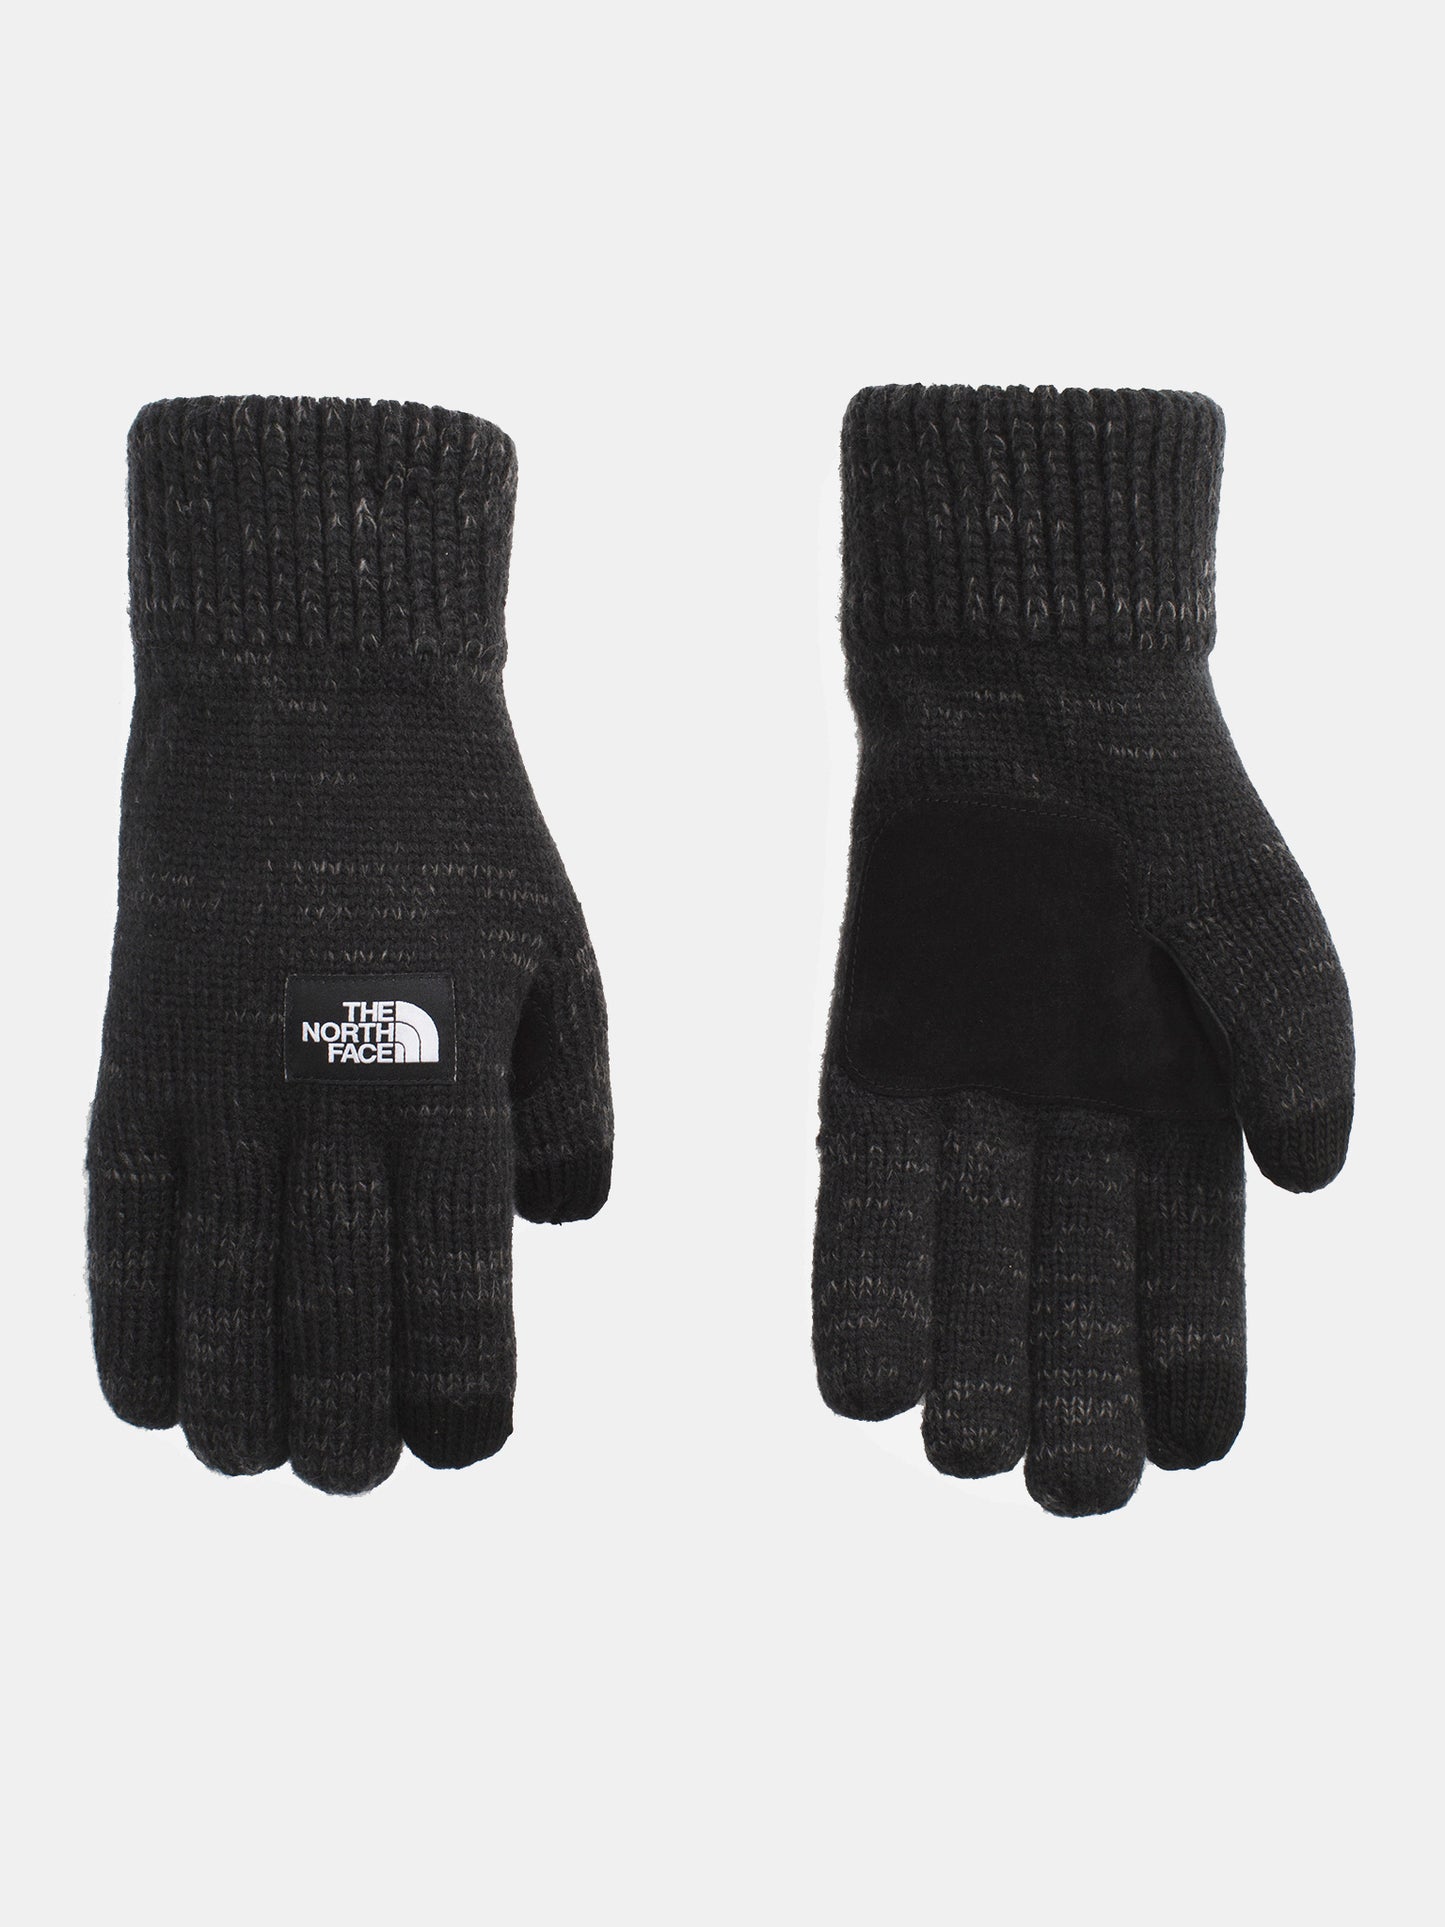 The North Face Men's Salty Dog E-Tip Gloves